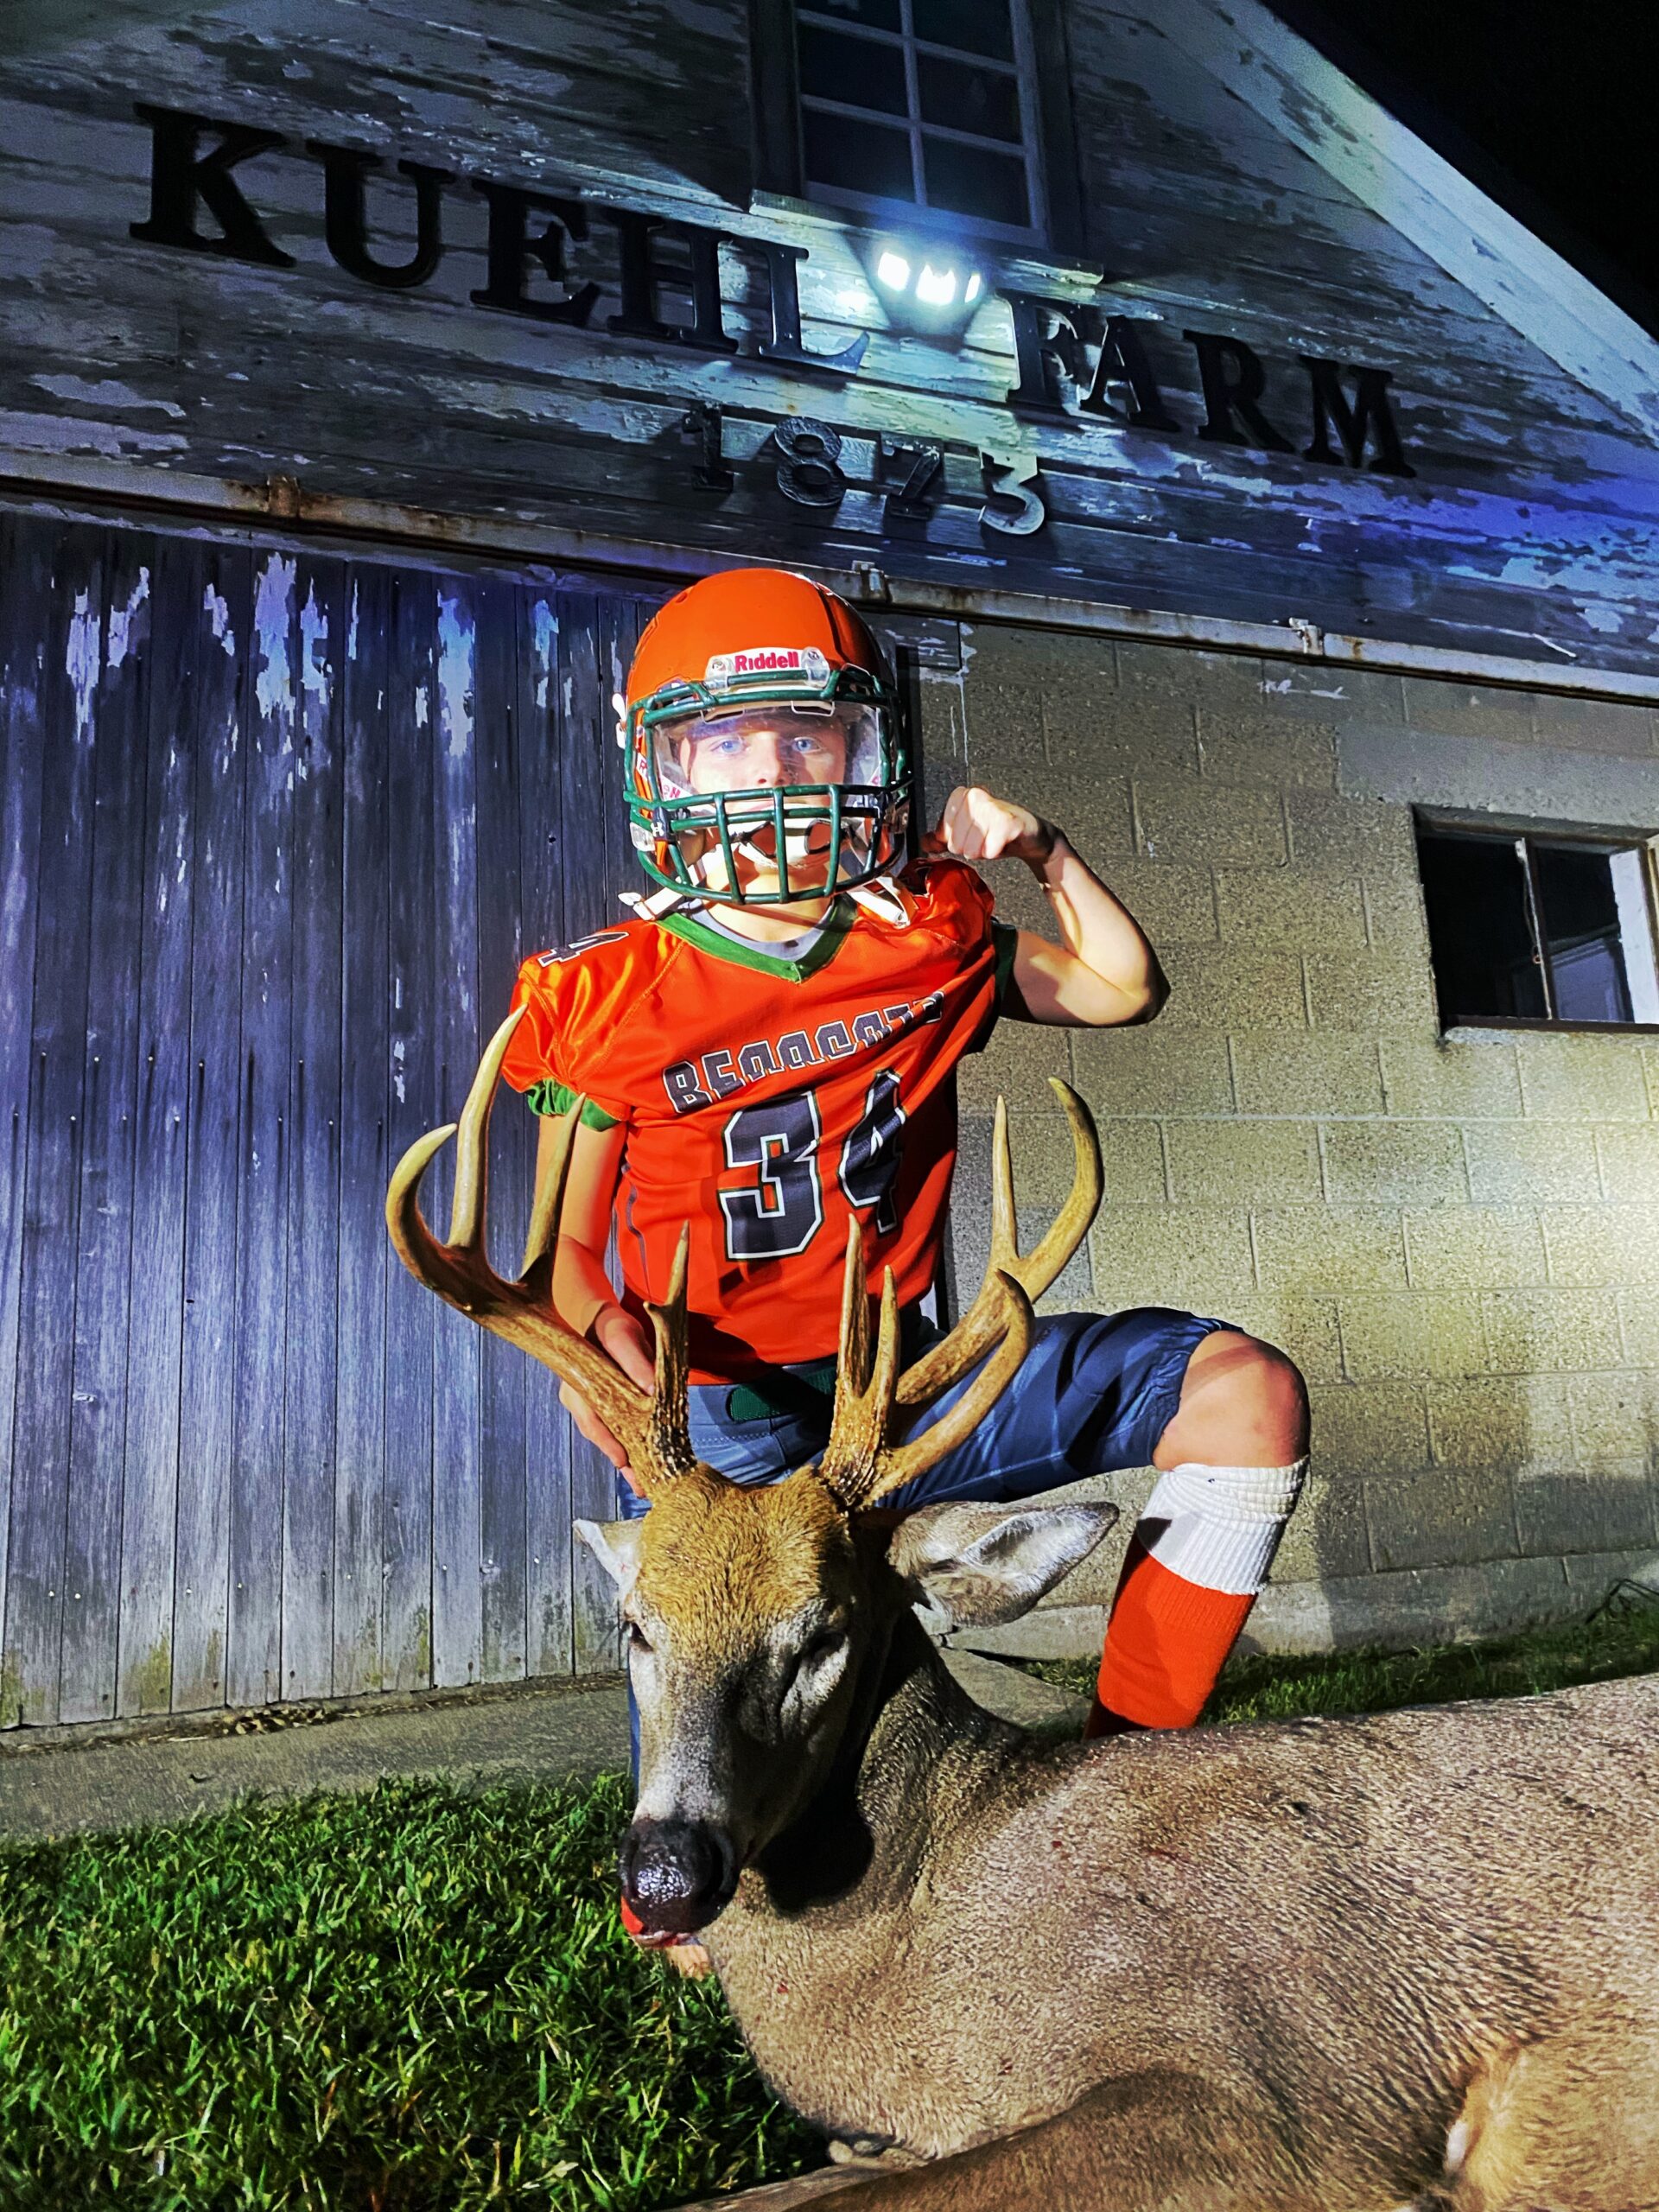 A young football player flexes next to a nice Indiana buck.